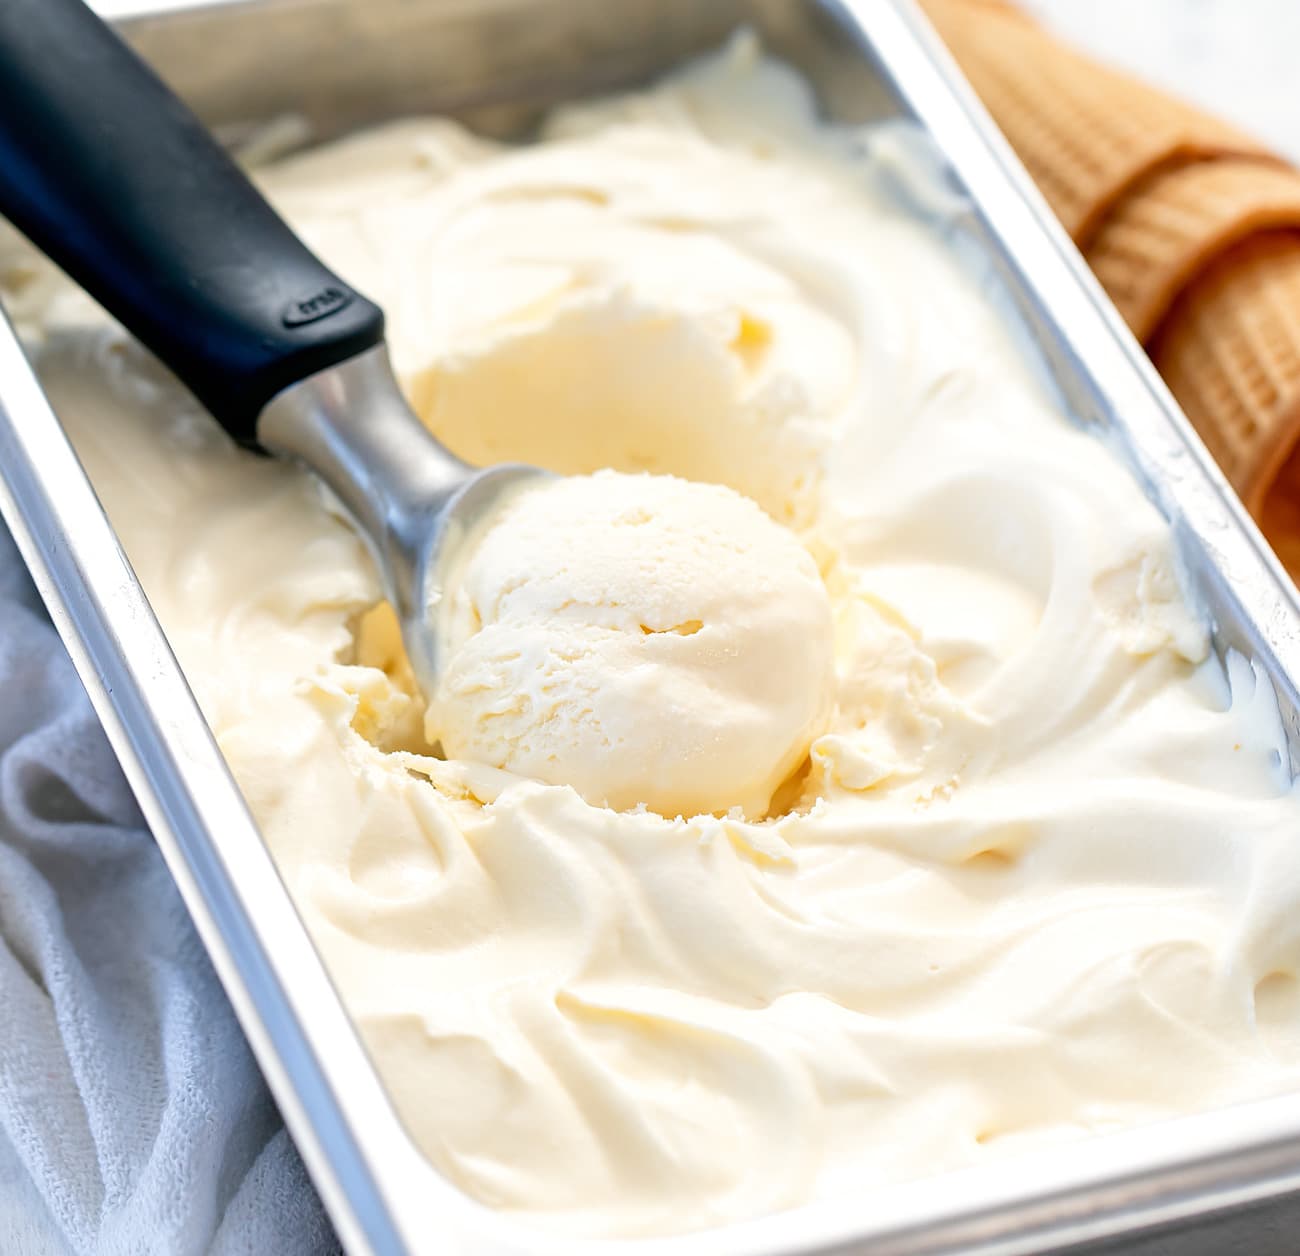 How to Make No-Churn Ice Cream (2 Ingredients)